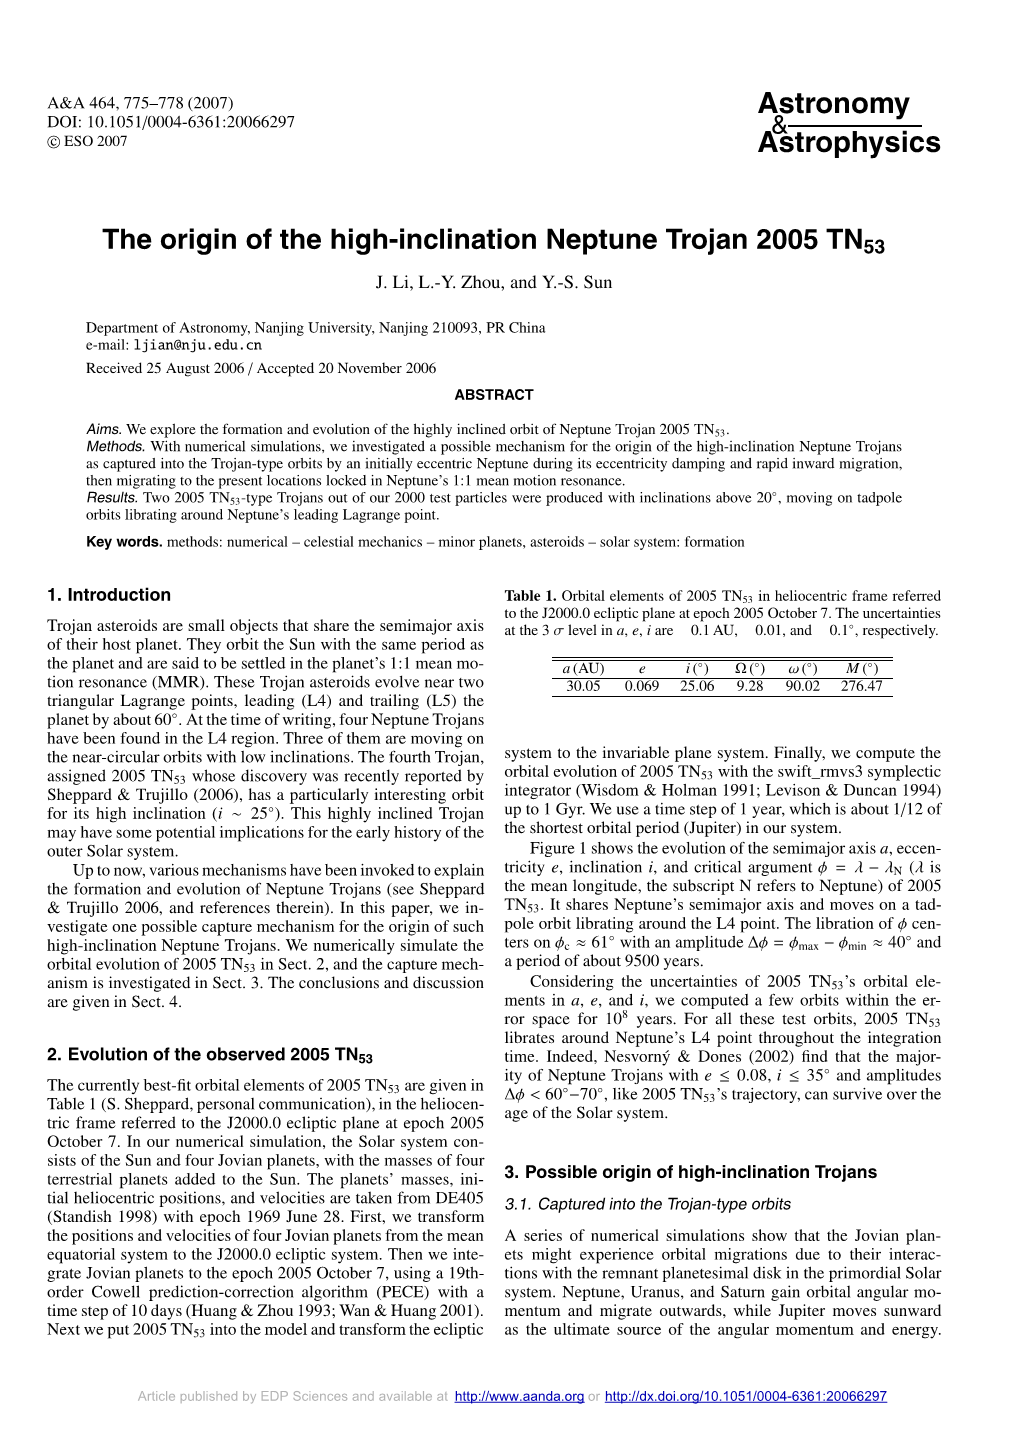 The Origin of the High-Inclination Neptune Trojan 2005 TN53 J